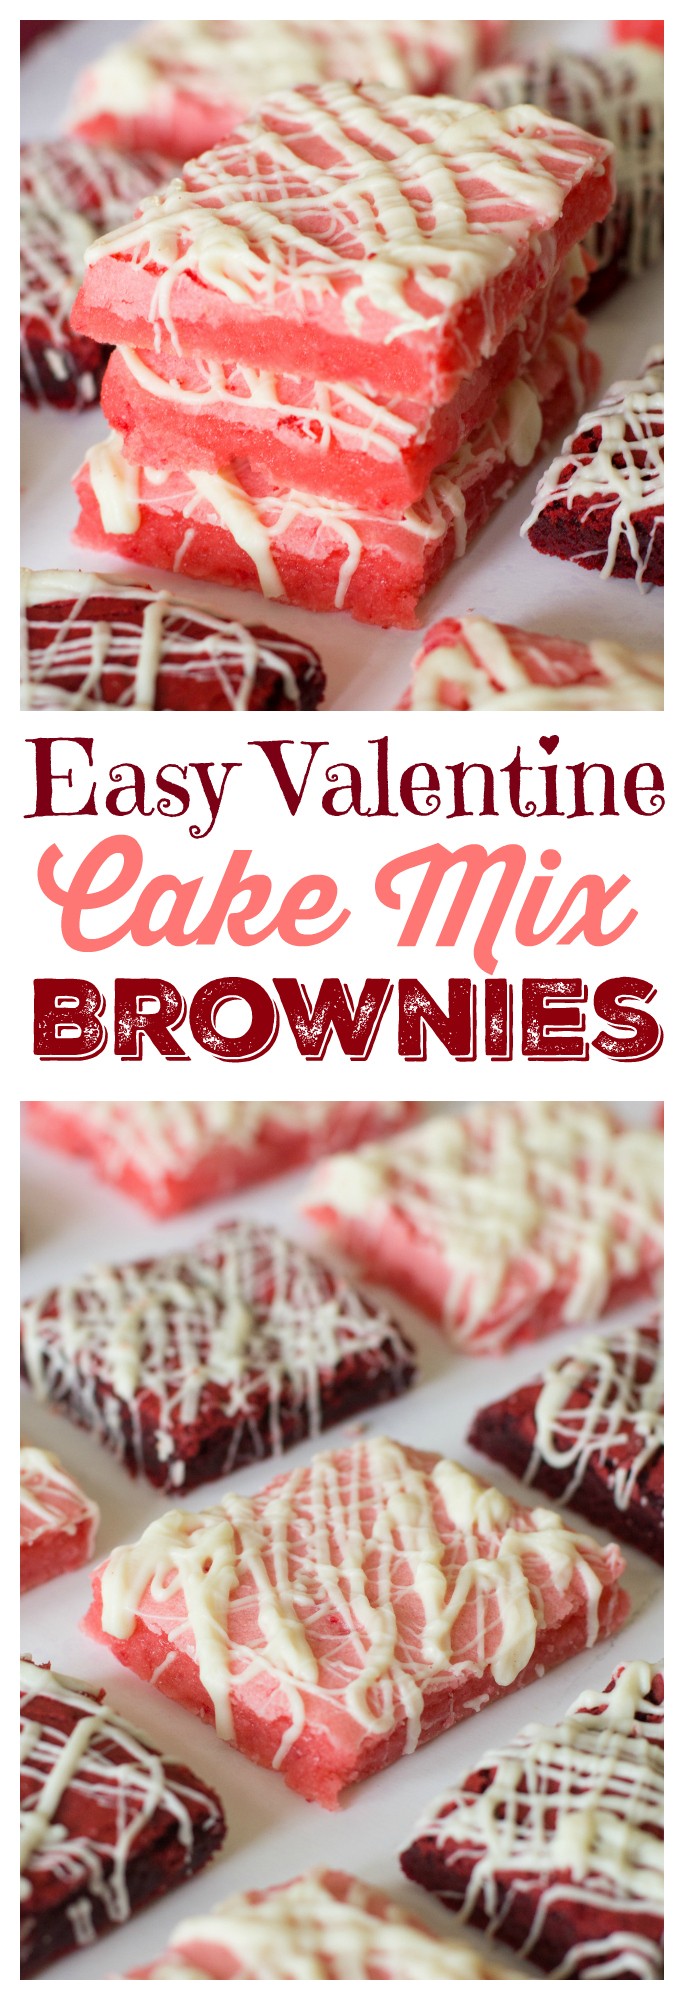 Easy Valentine Cake Mix Brownies - Sugar n' Spice Gals